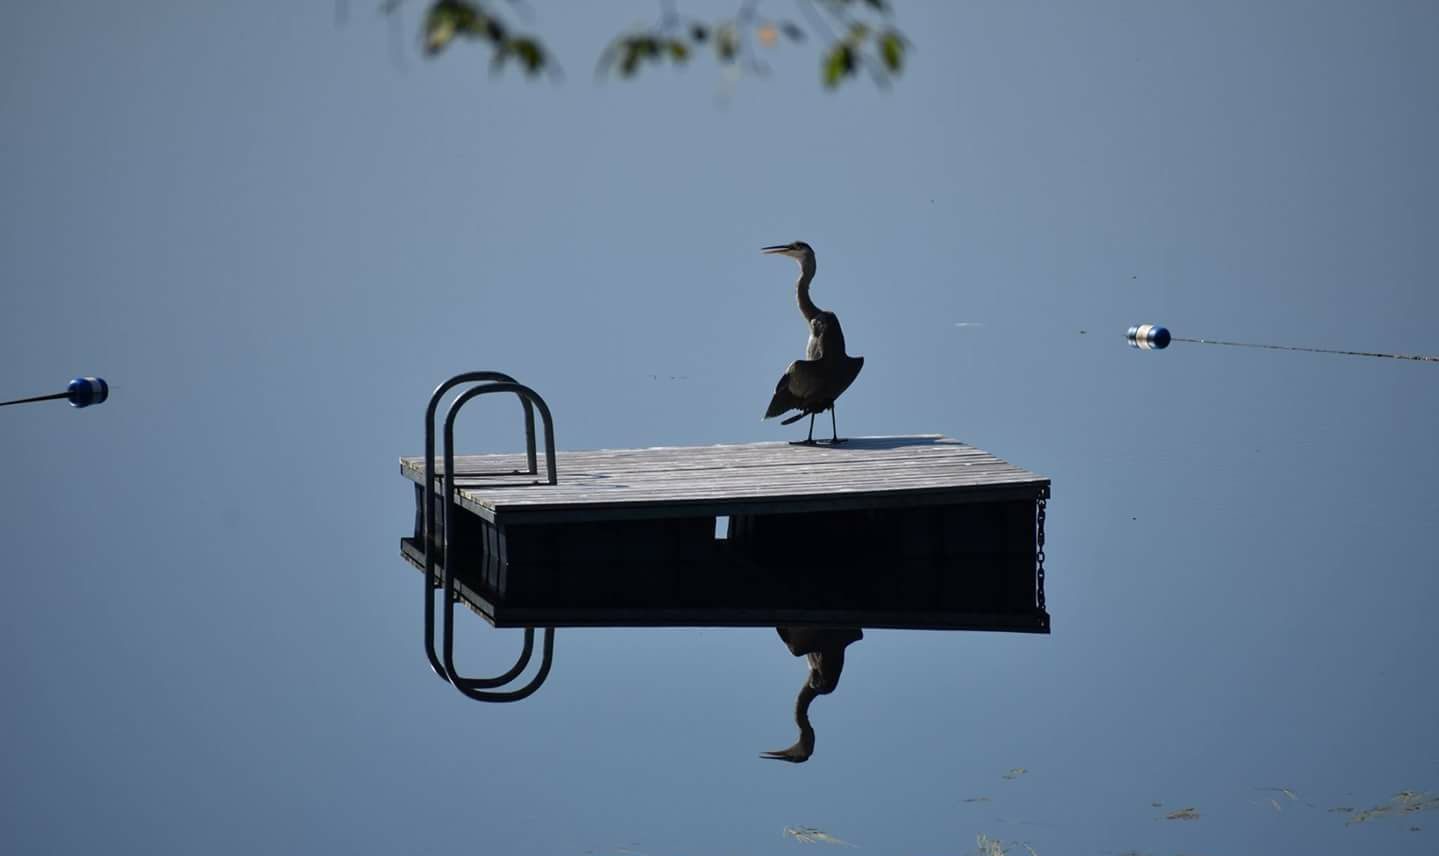 Birds on the Lake